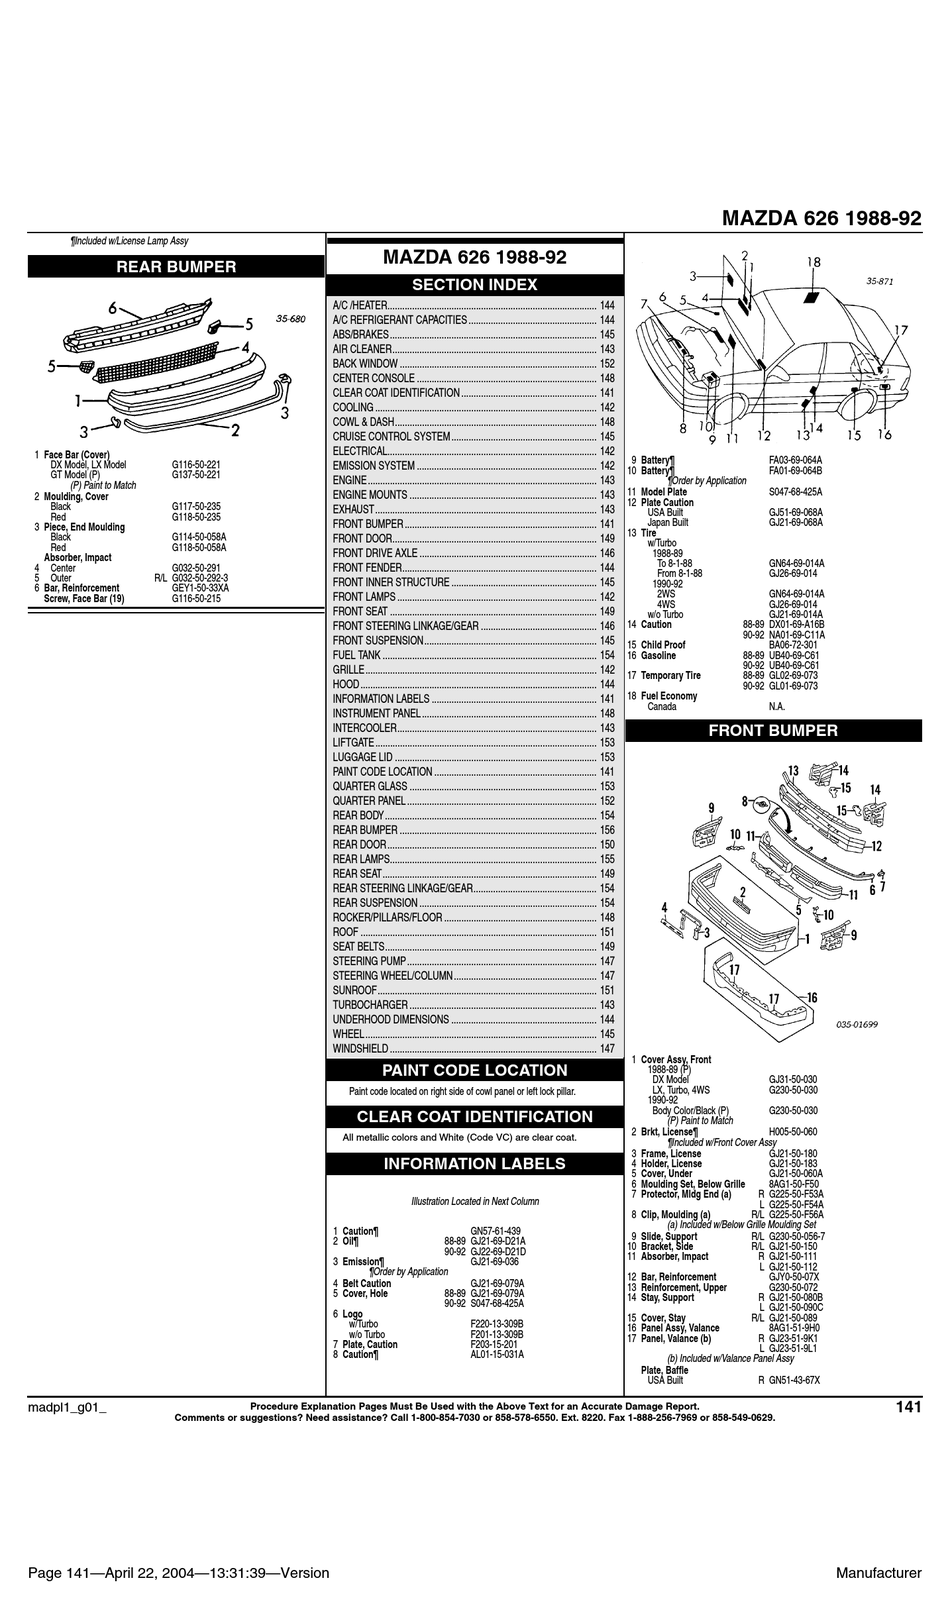 Mazda 626 Owner's Manual Pdf Download | Manualslib